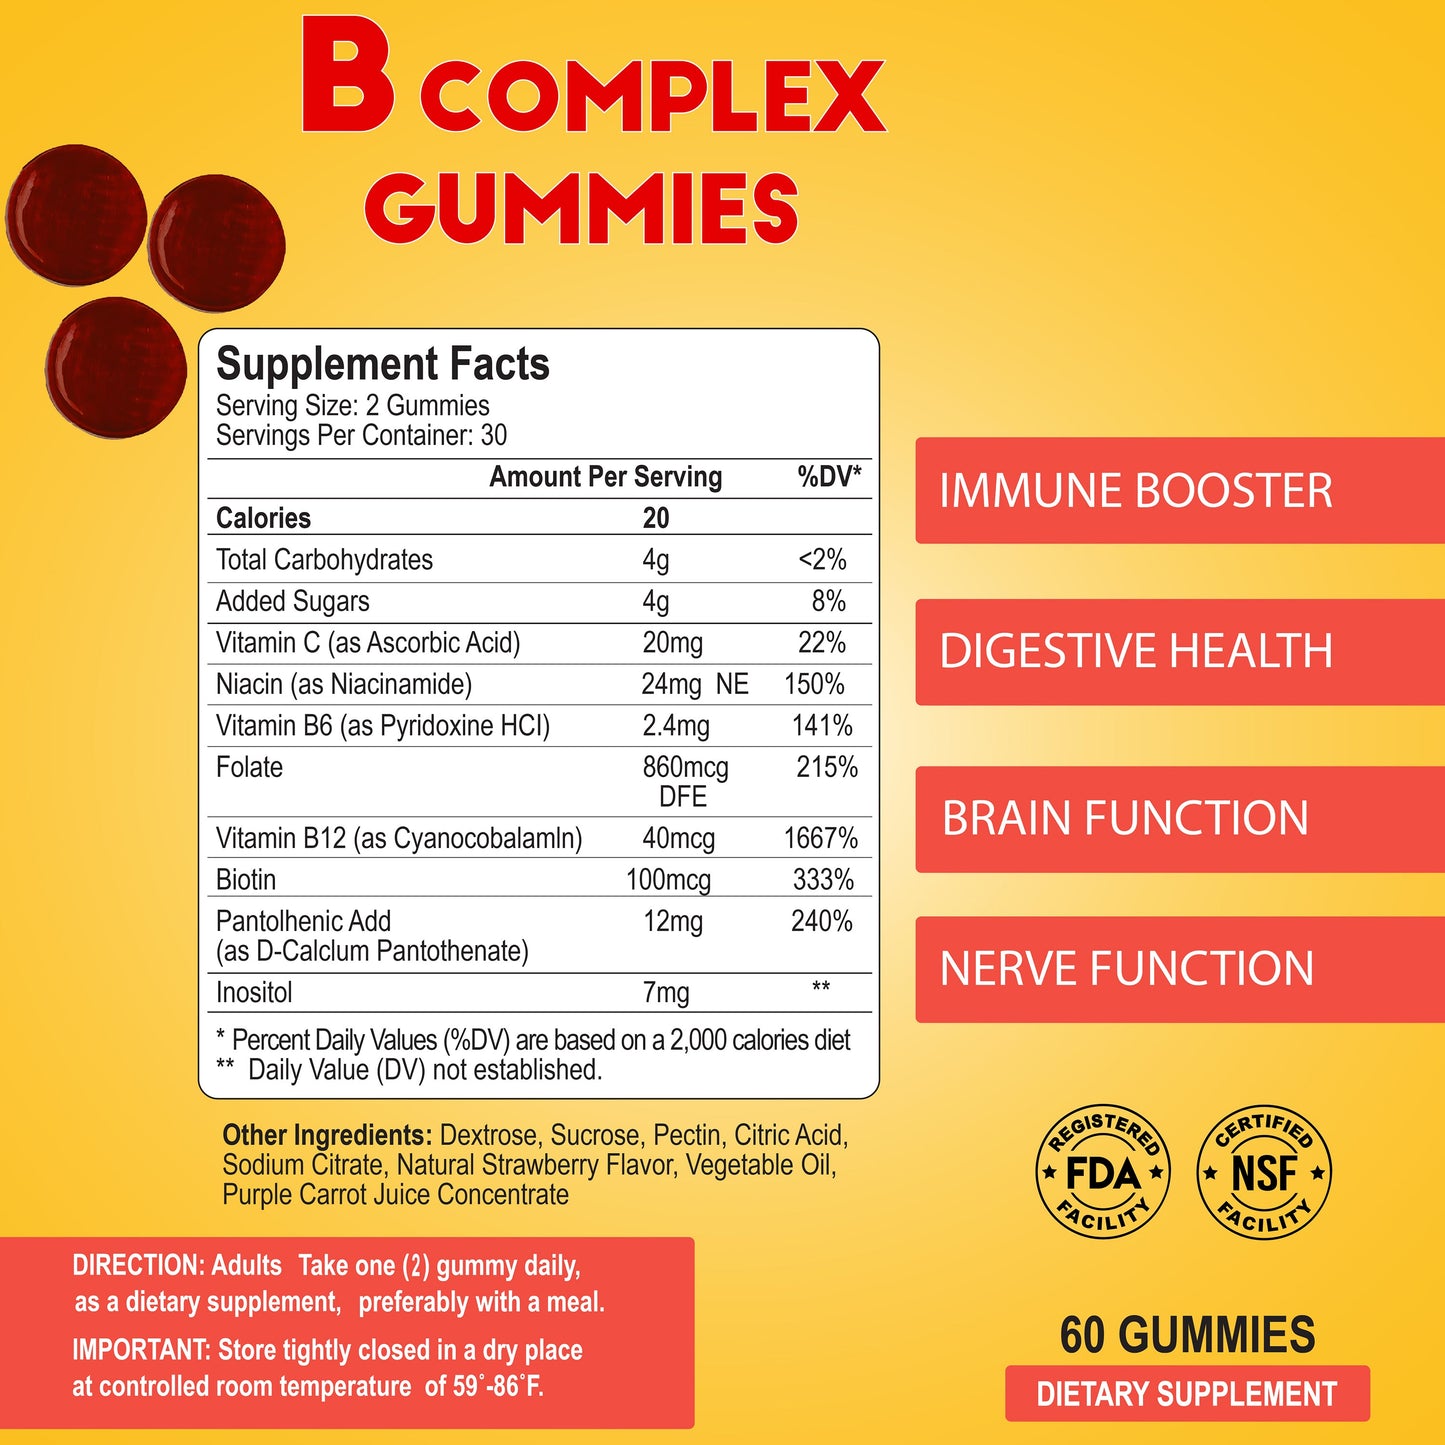 B Complex Gummies 60 Gummies - Master Case 48